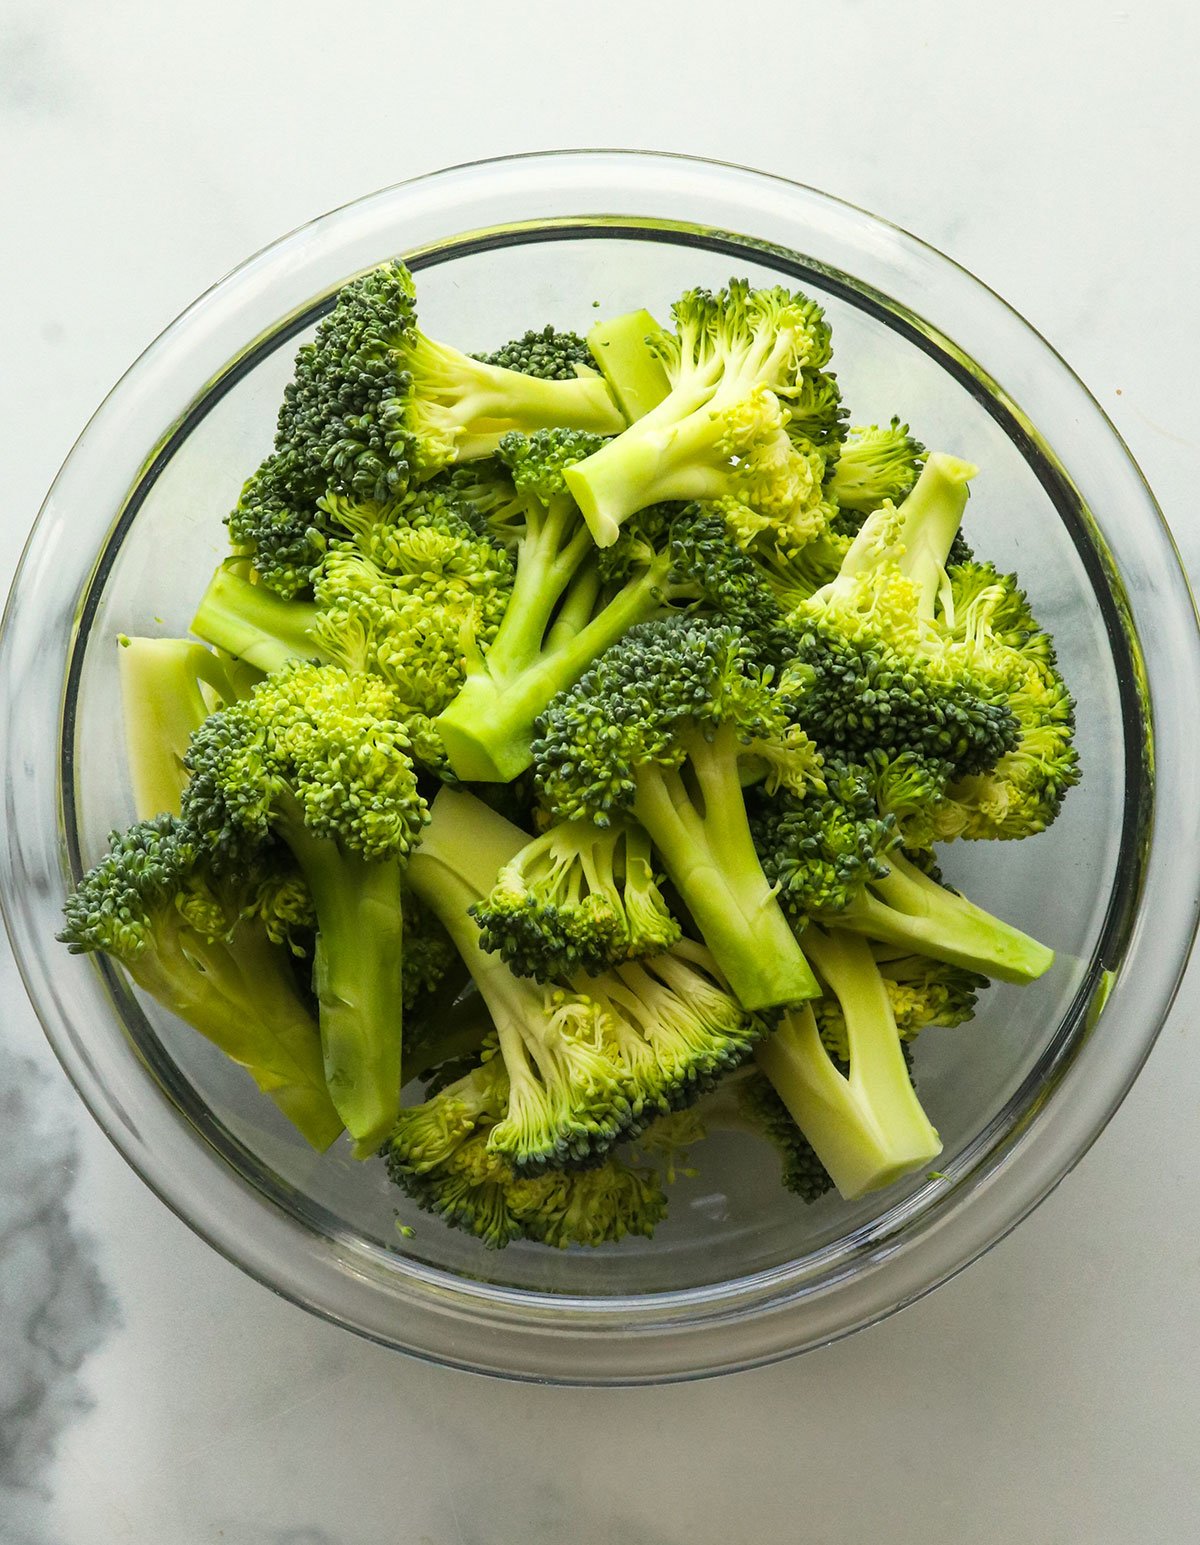 raw broccoli florets in a glass bowl.